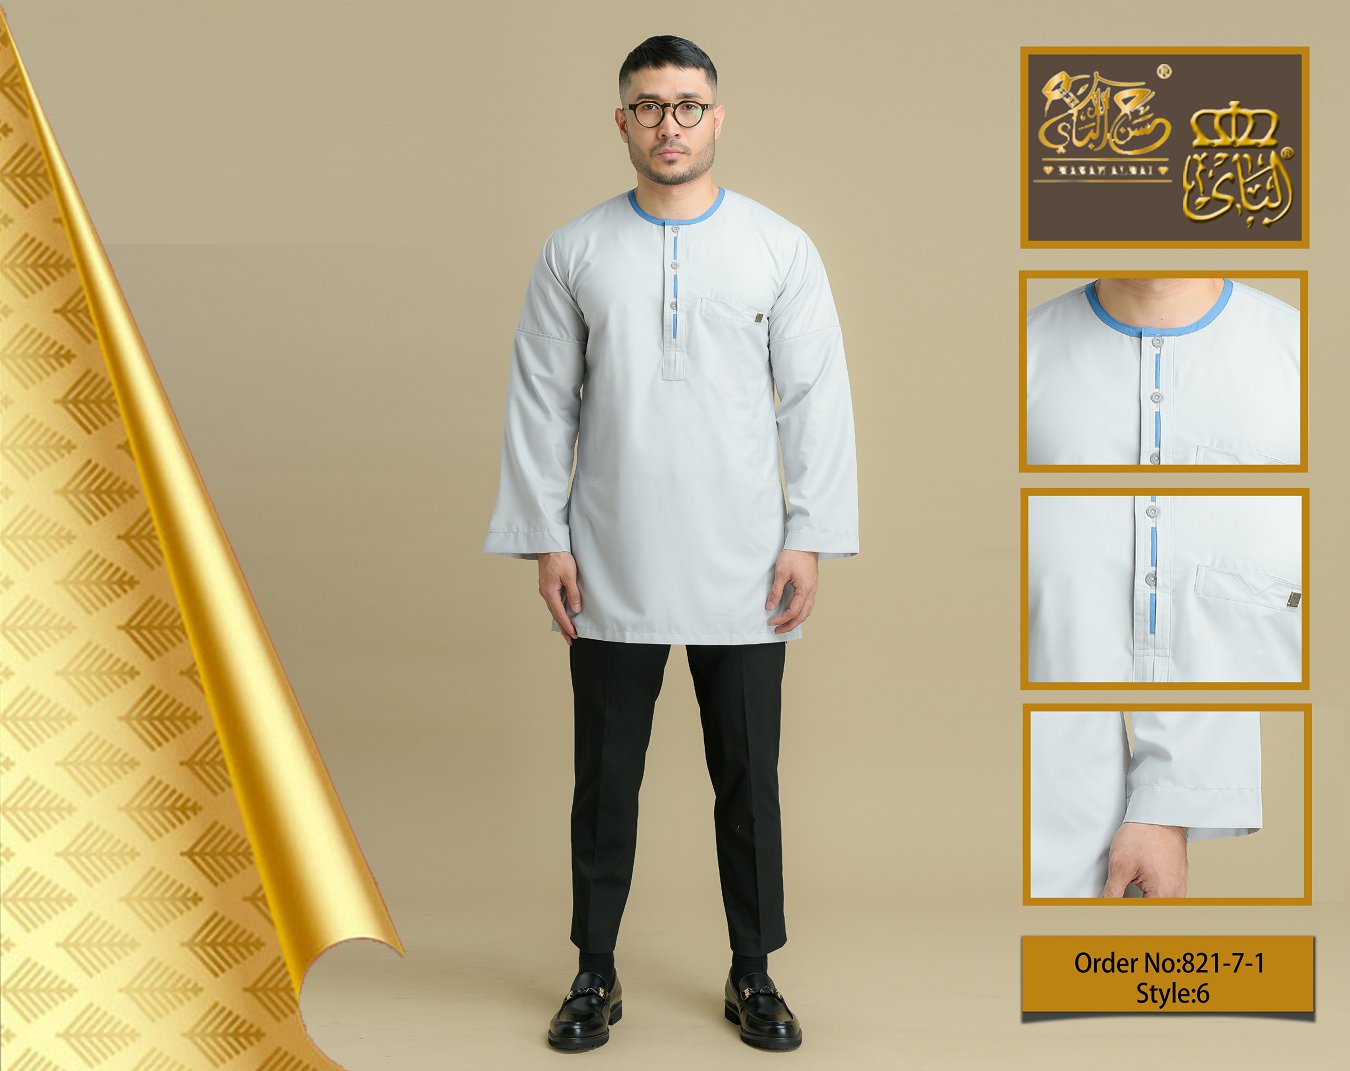 Malay clothing33